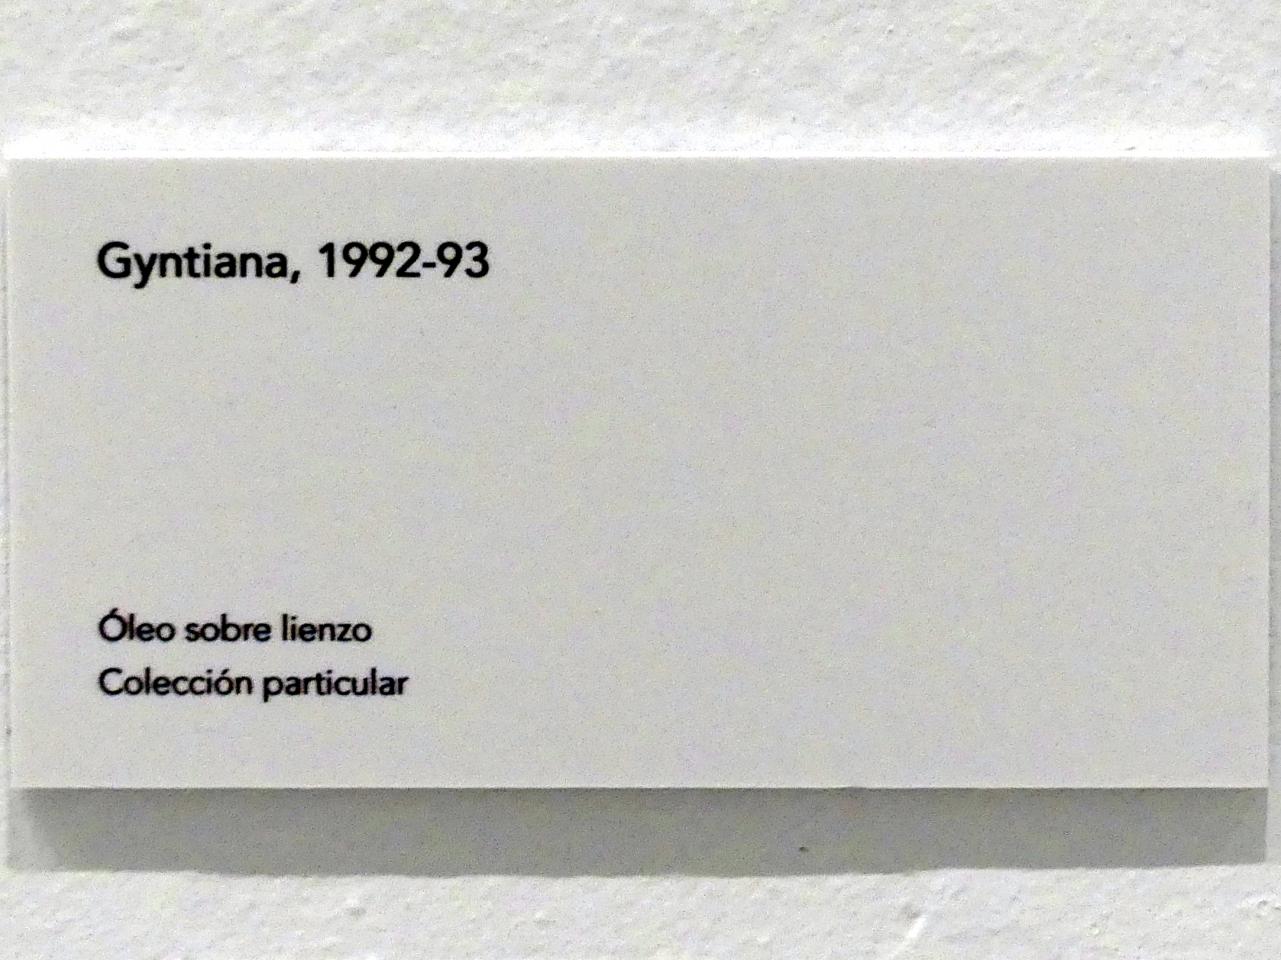 Jörg Immendorff (1965–2007), Gyntiana, Madrid, Museo Reina Sofía, Ausstellung "Jörg Immendorff - The Task of the Painter" vom 30.10.2019-13.04.2020, Saal 6, 1992–1993, Bild 2/2